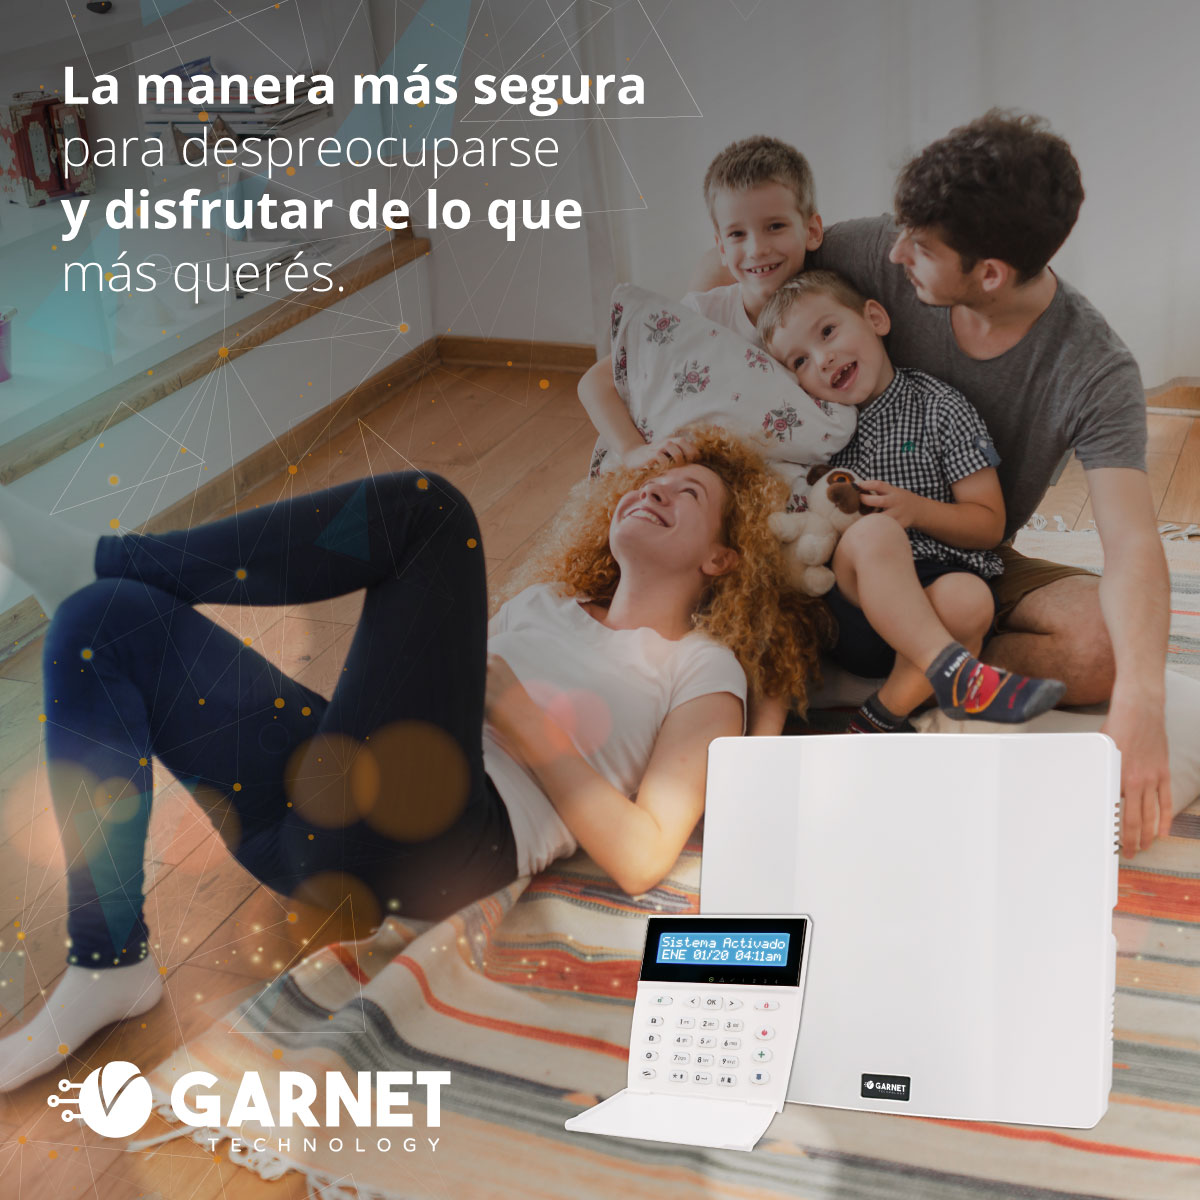 Protege a tu familia con Garnet Technology